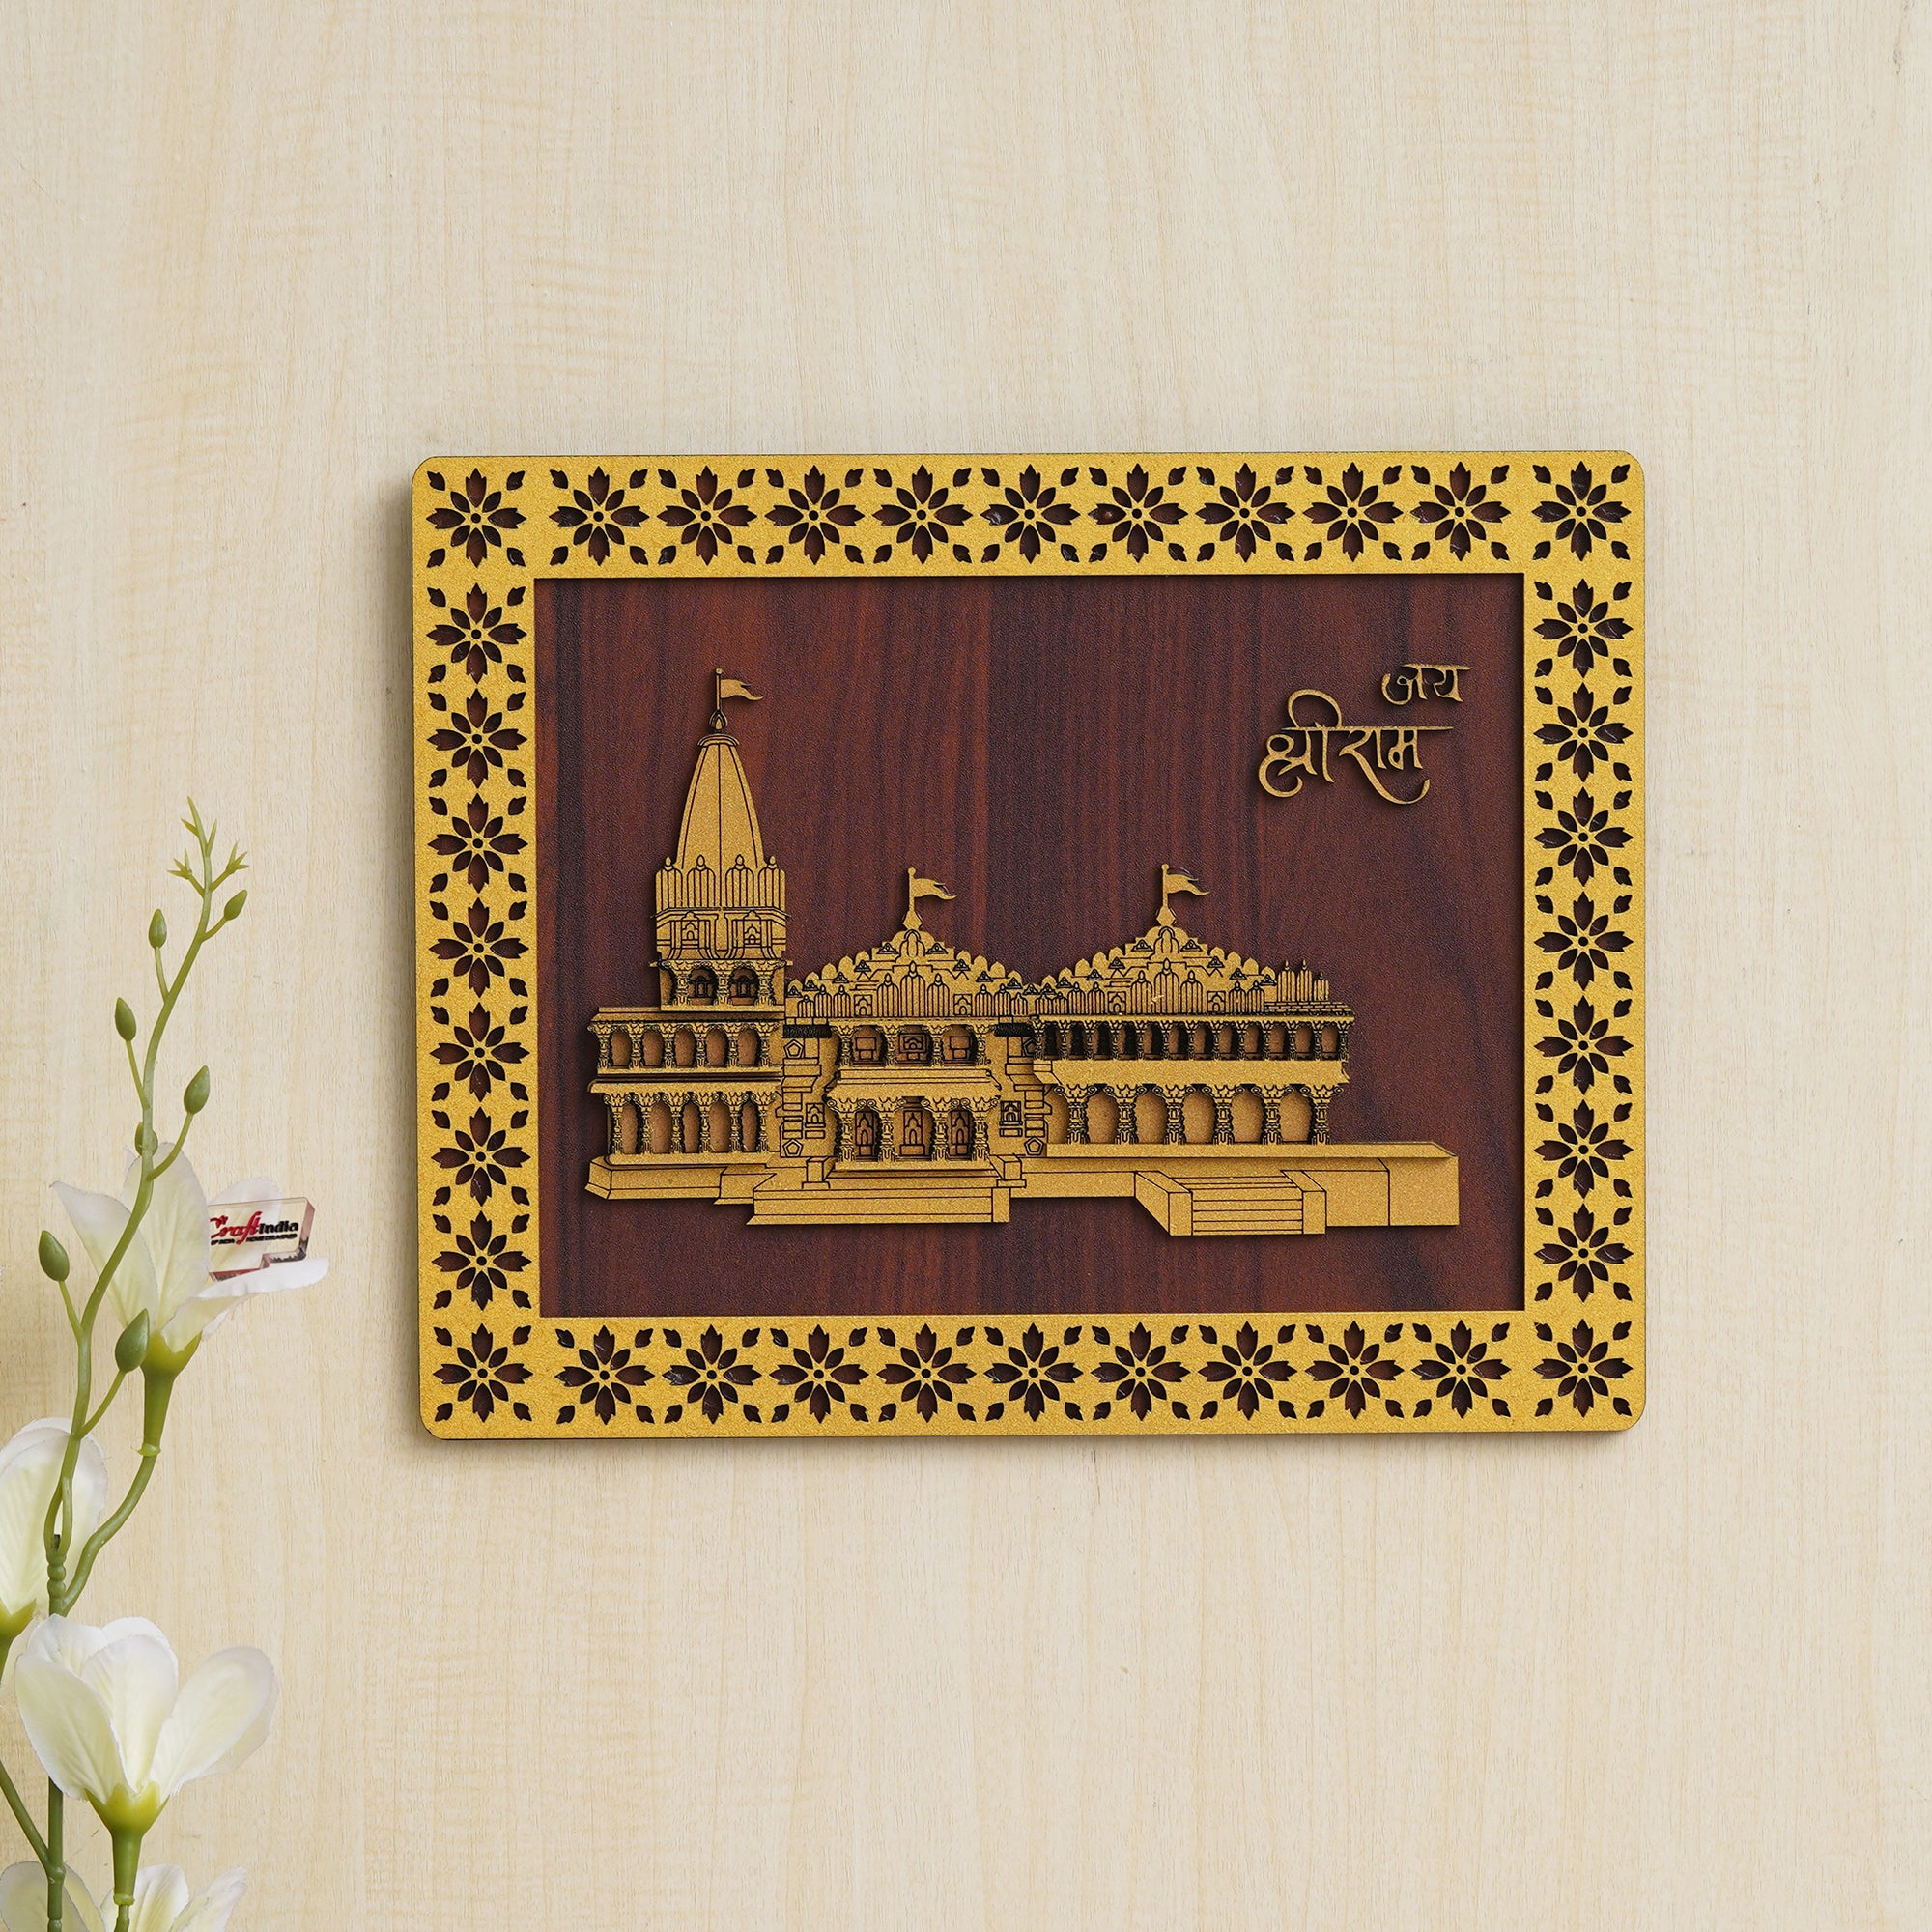 eCraftIndia Jai Shri Ram Mandir Ayodhya Decorative Wooden Frame - Religious Wall Hanging Showpiece for Home Decor, and Spiritual Gifting (Gold, Brown) 4